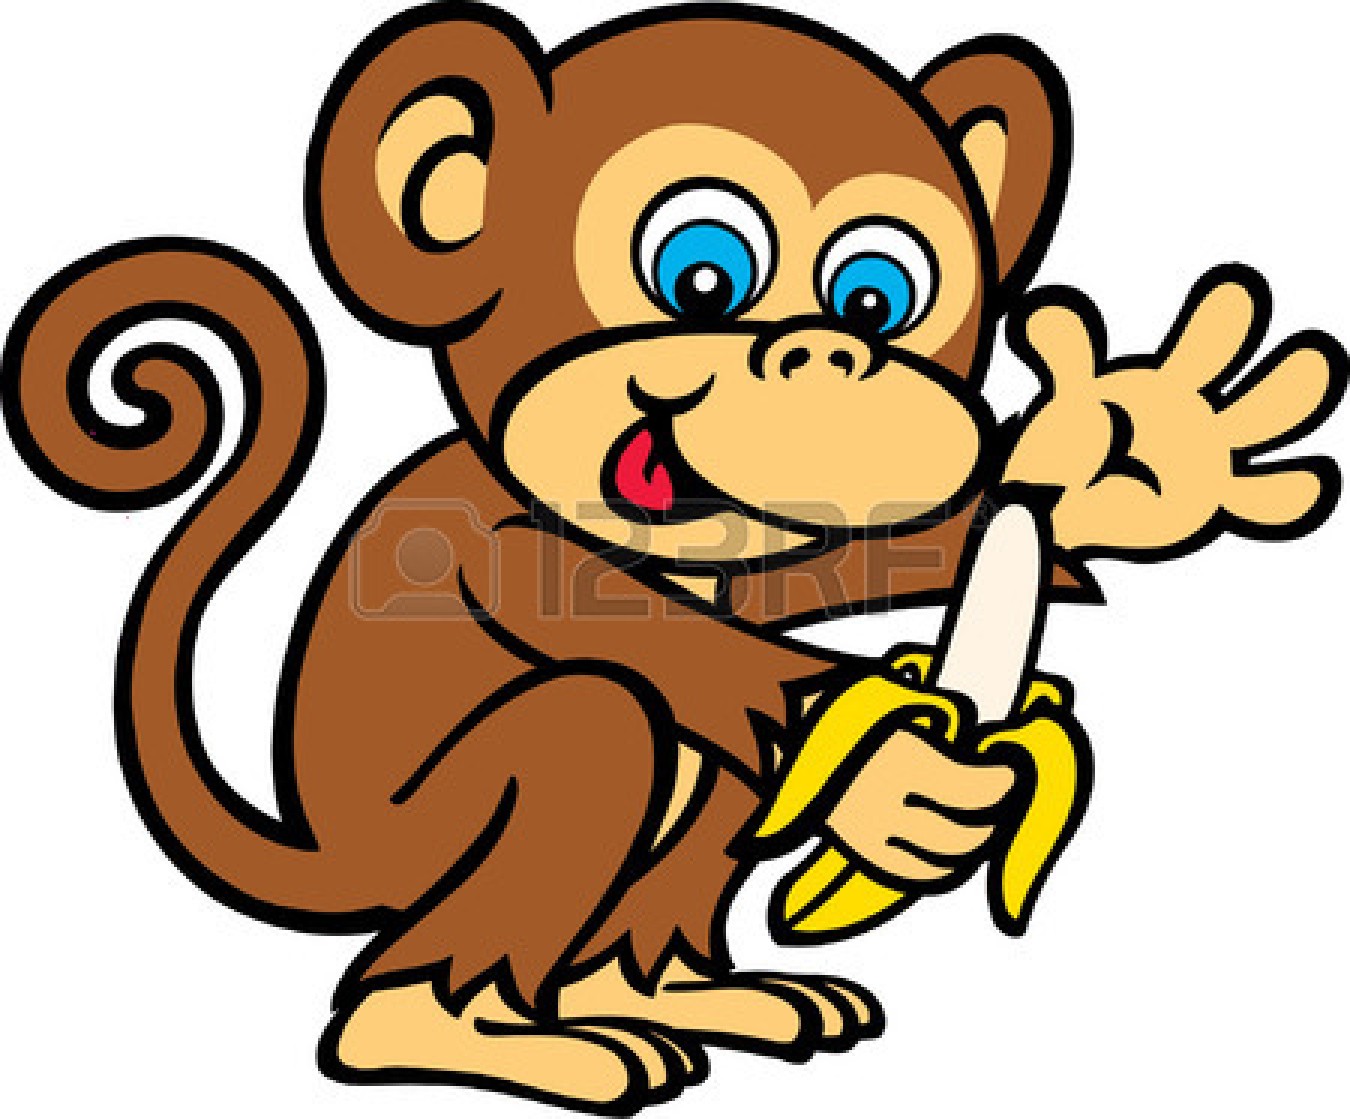 Monkey and banana.